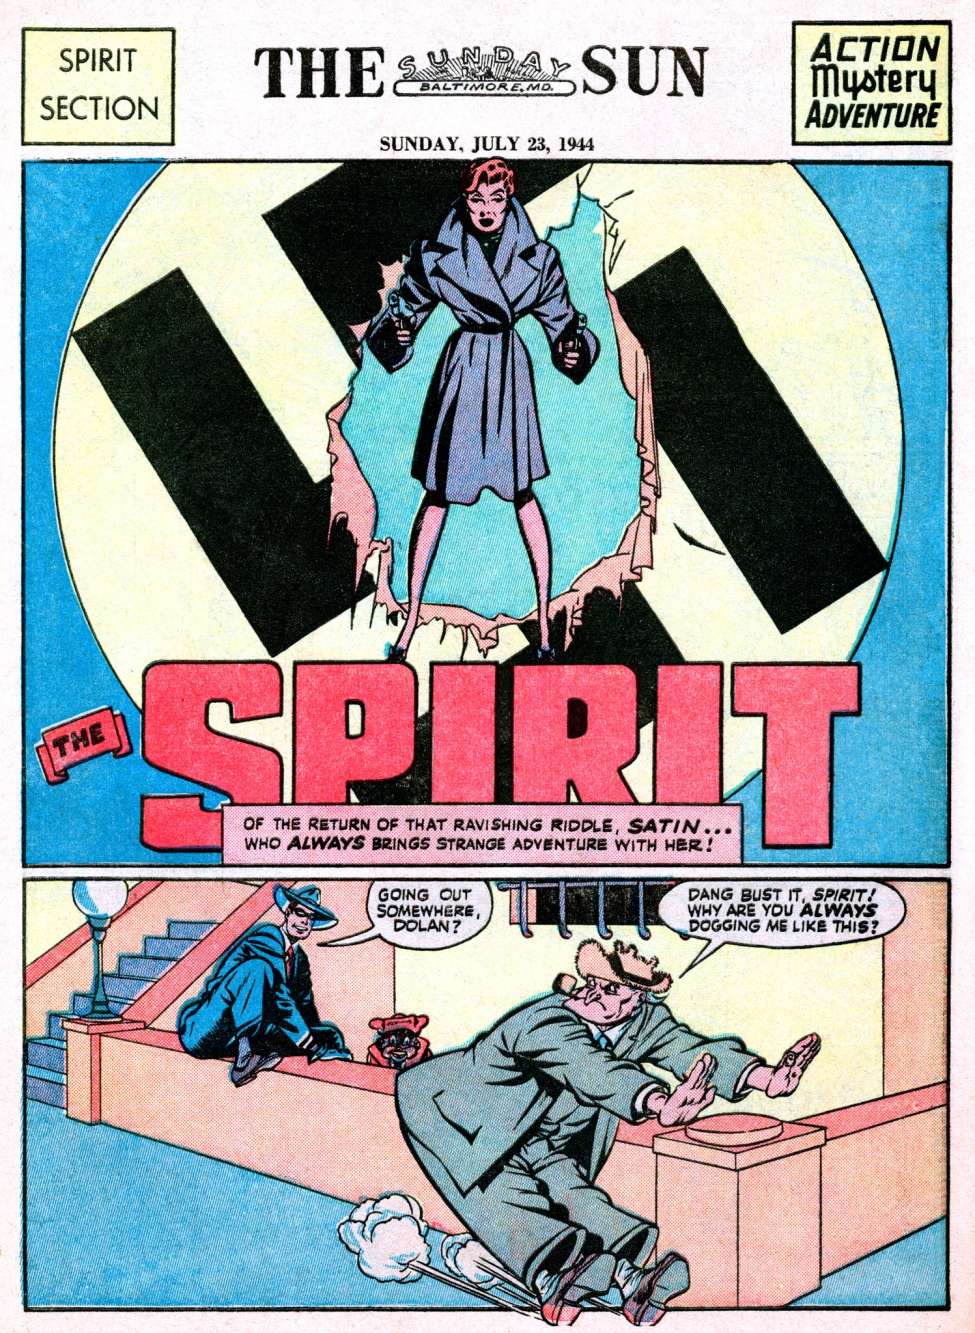 Comic Book Cover For The Spirit (1944-07-23) - Baltimore Sun